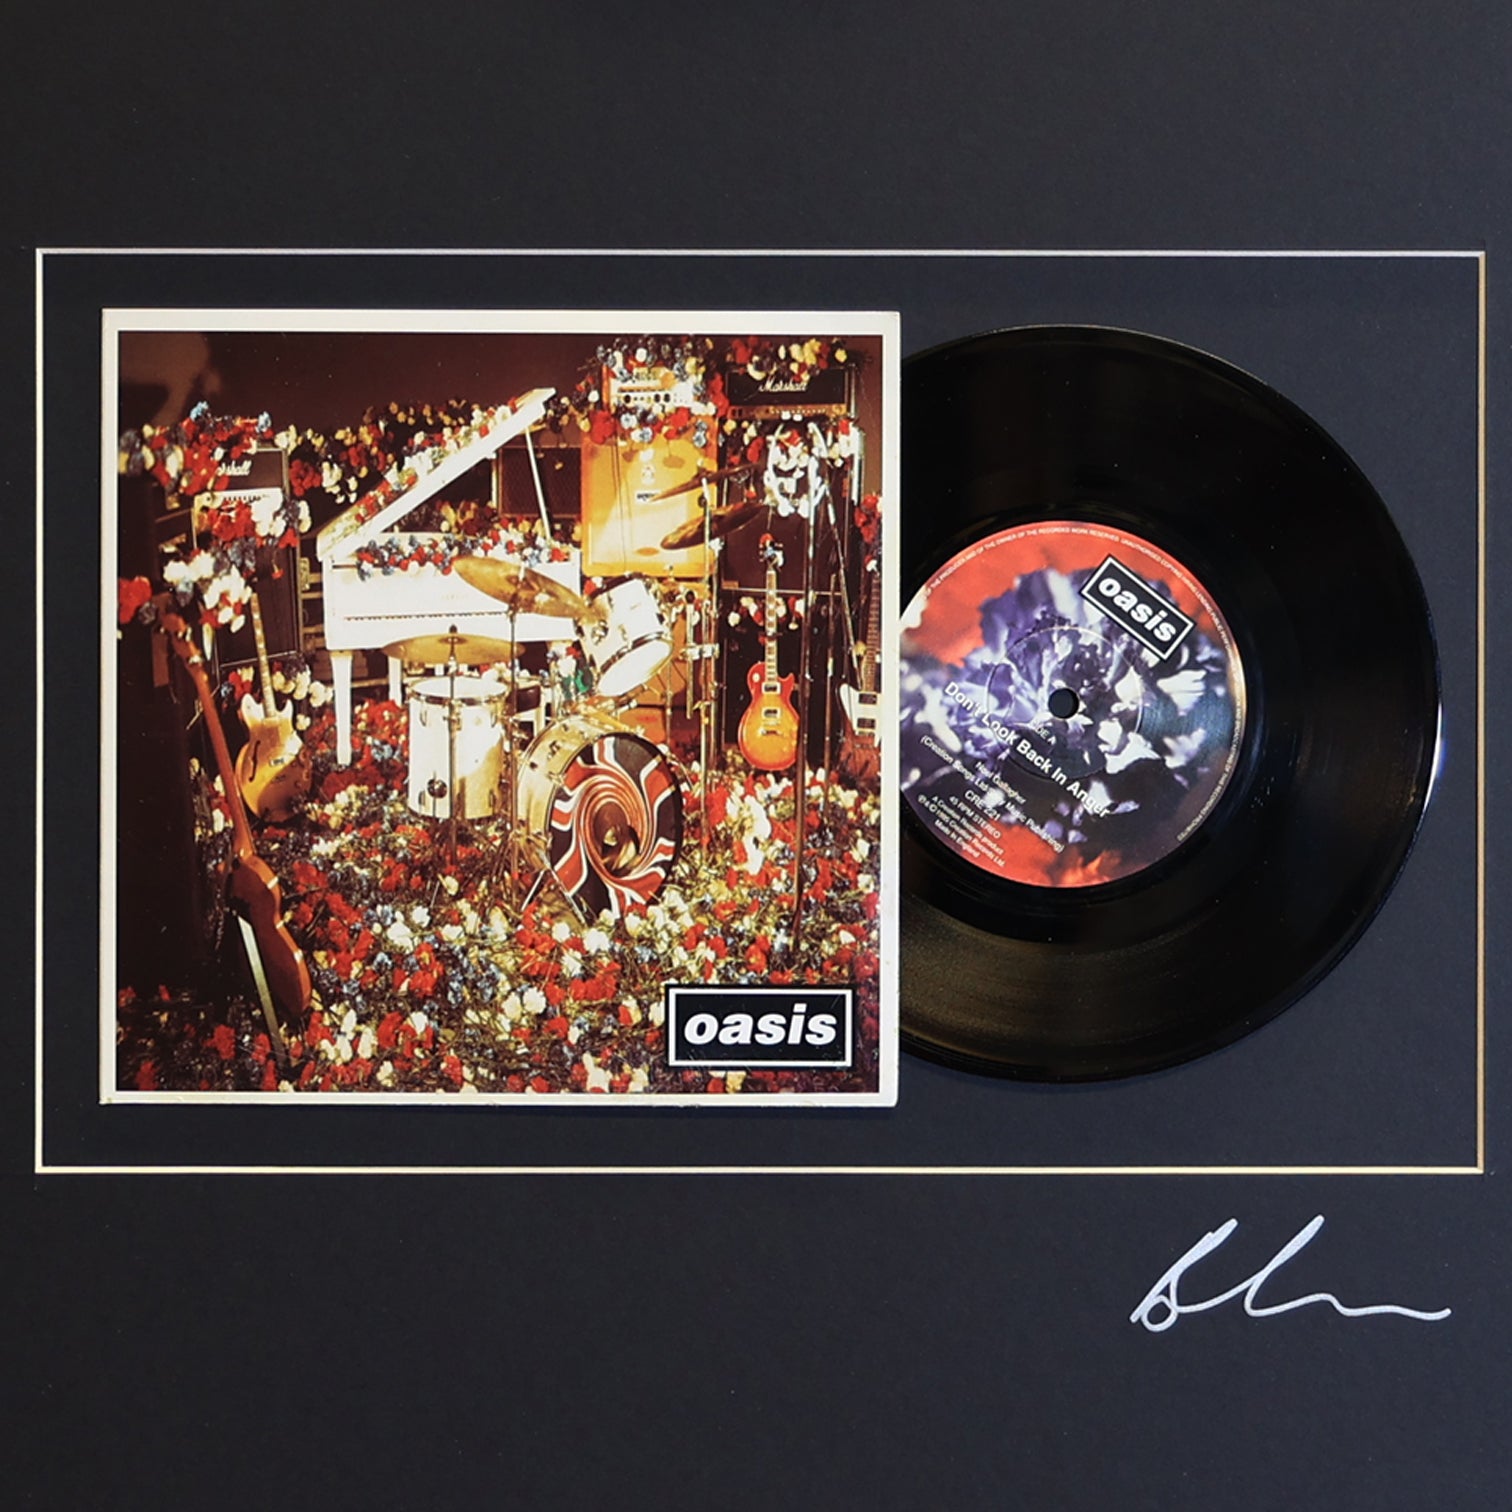 Oasis - Don't Look Back In Anger - Framed 7 inch Vinyl - New Item